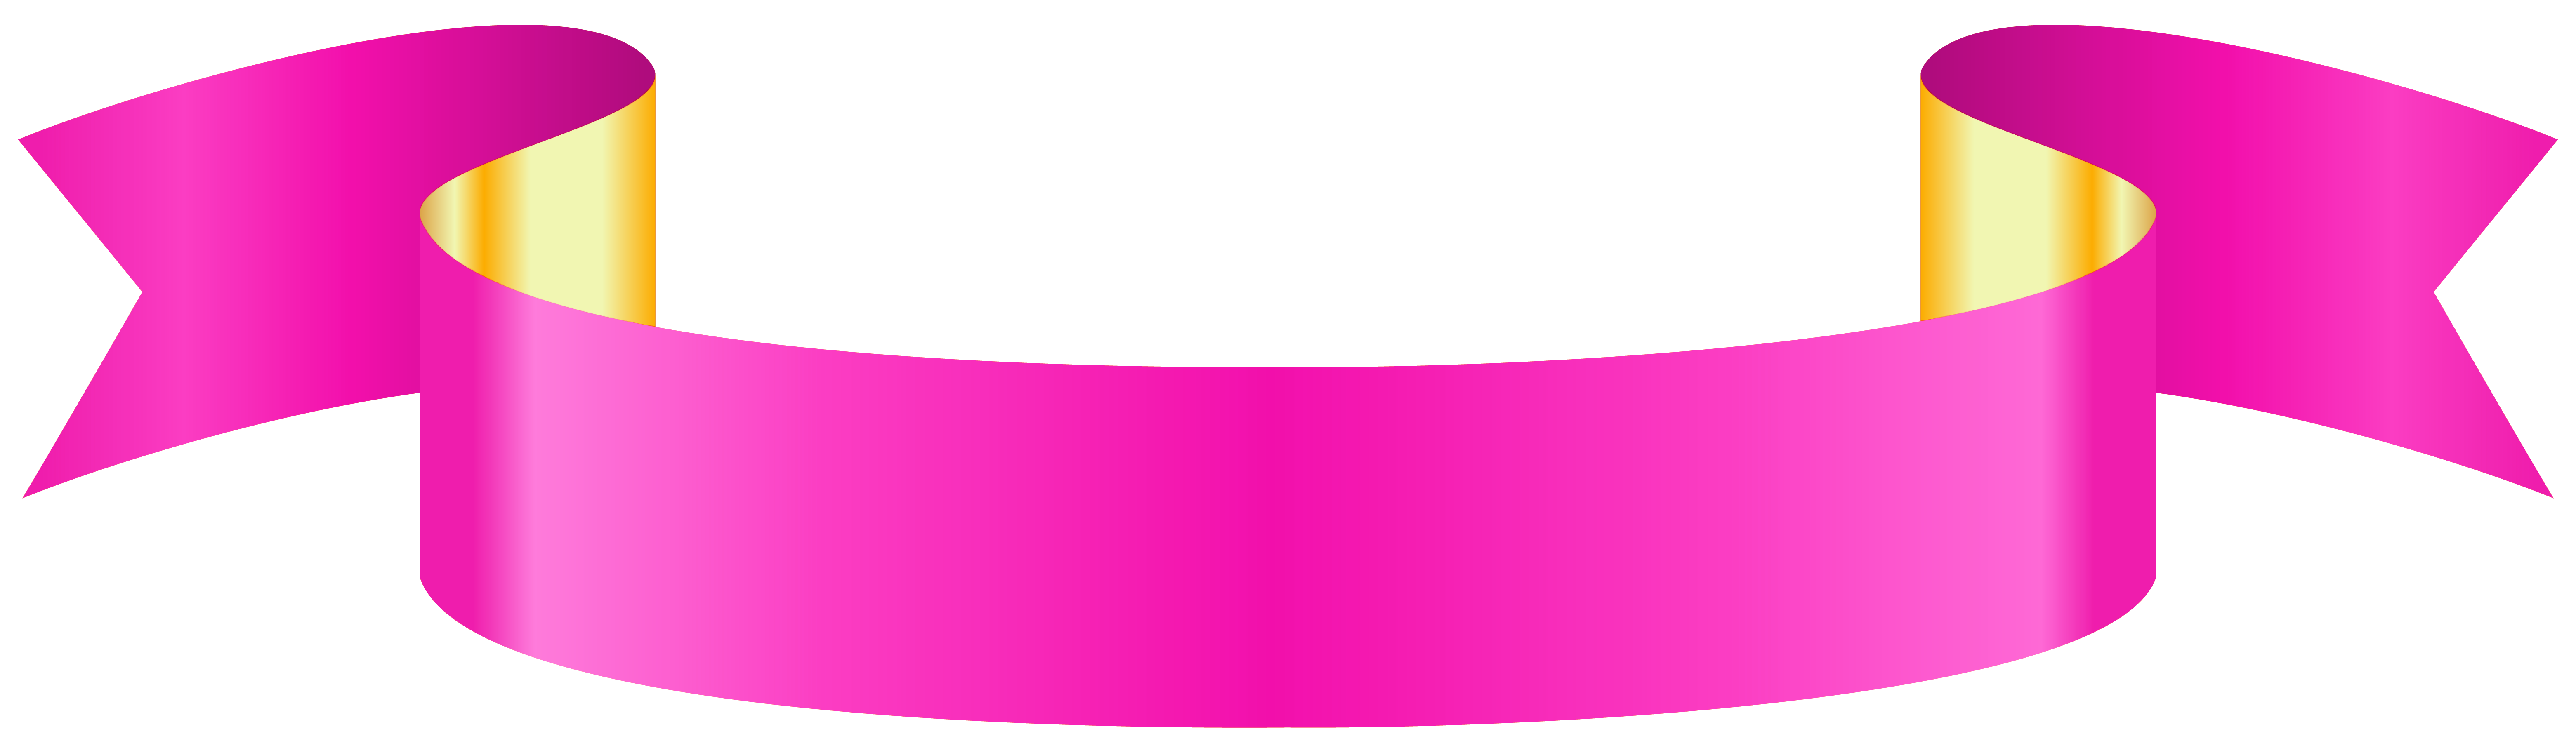 Pink Banner Transparent PNG Clip Art Image  Gallery 